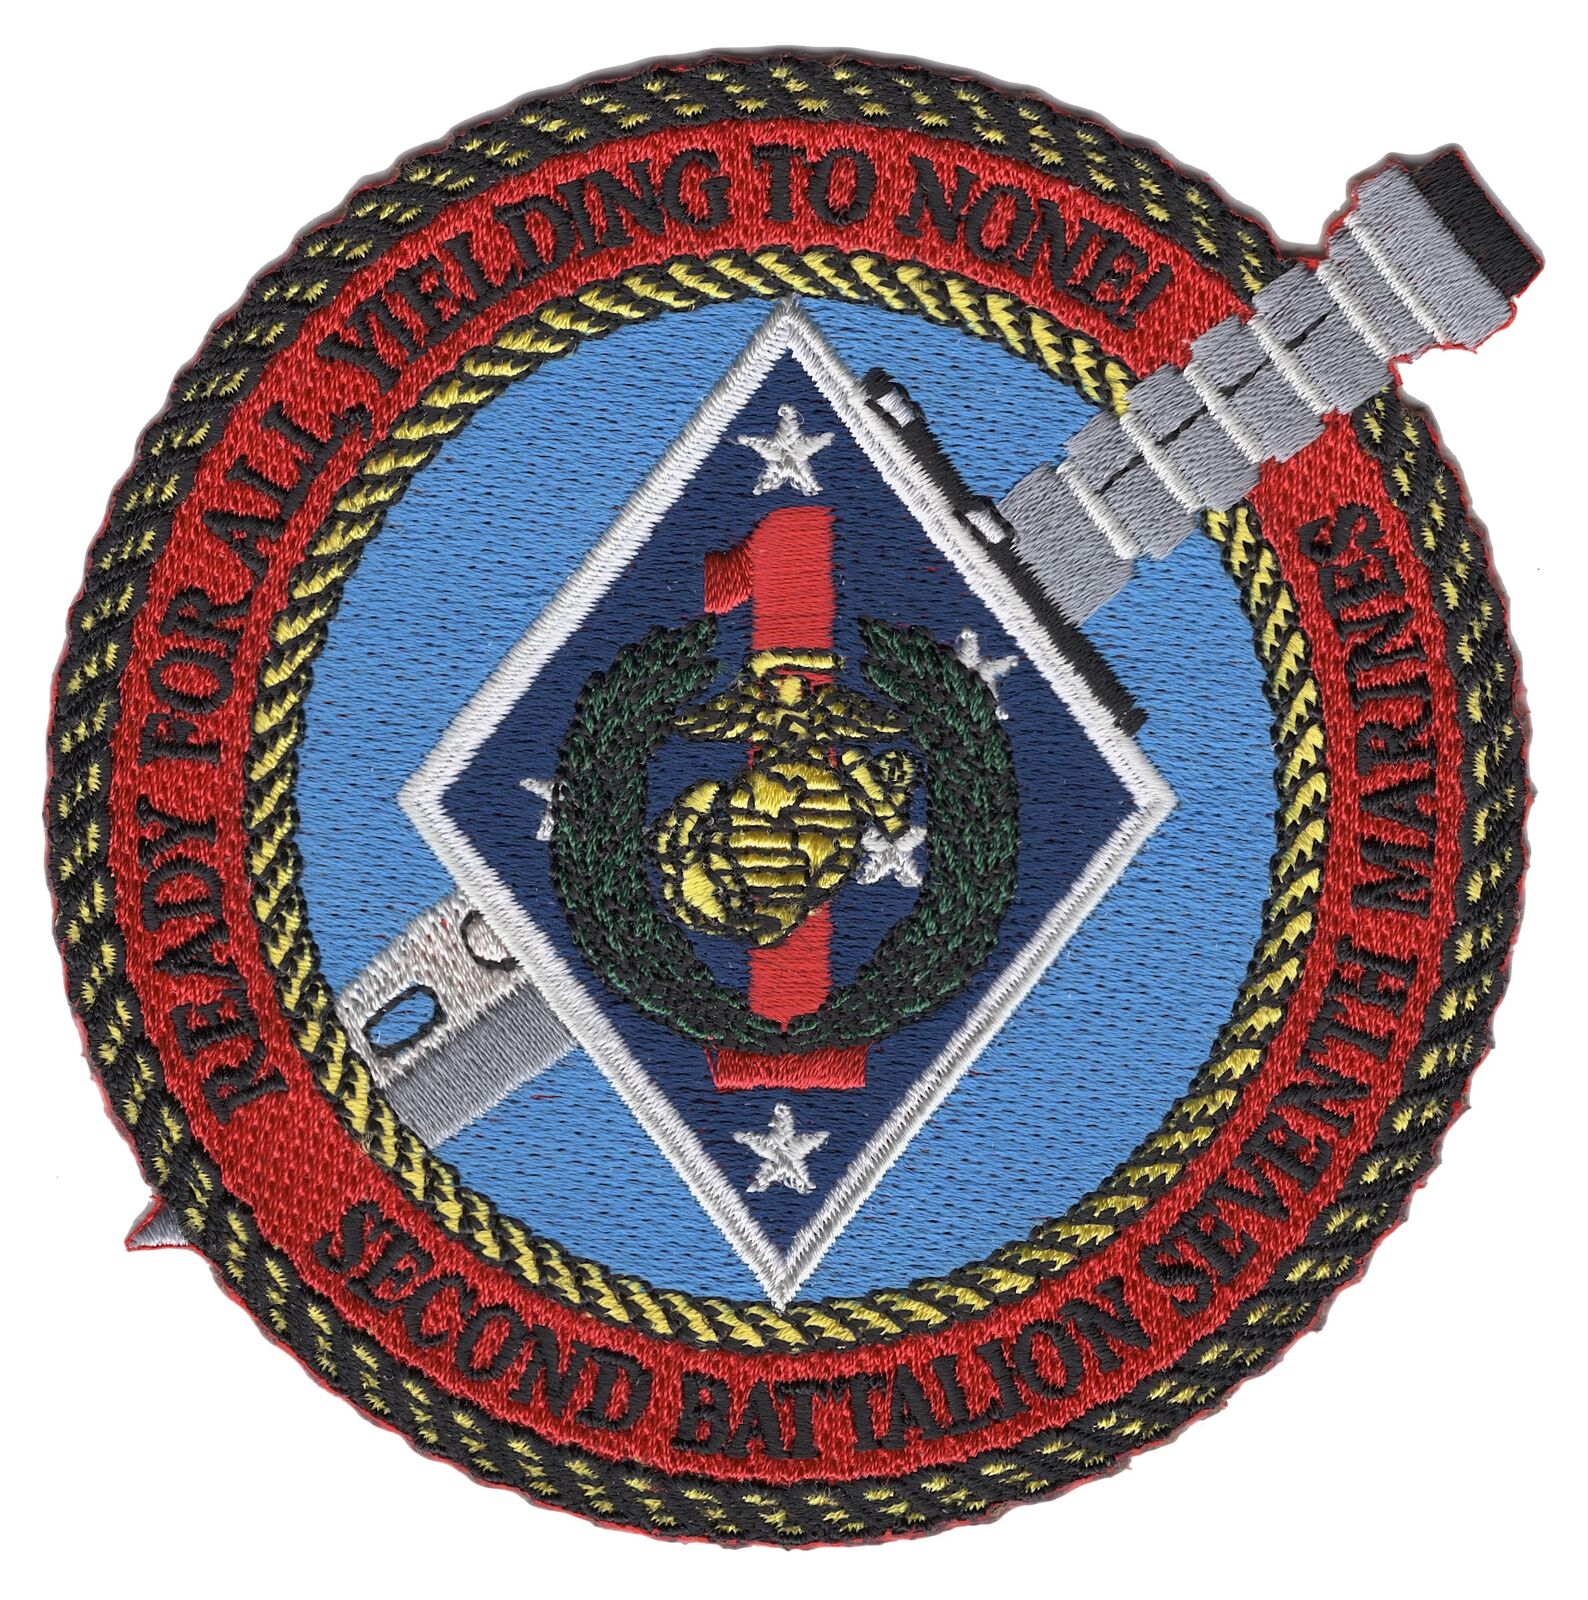 2nd Battalion 7th Marines Regiment Patch